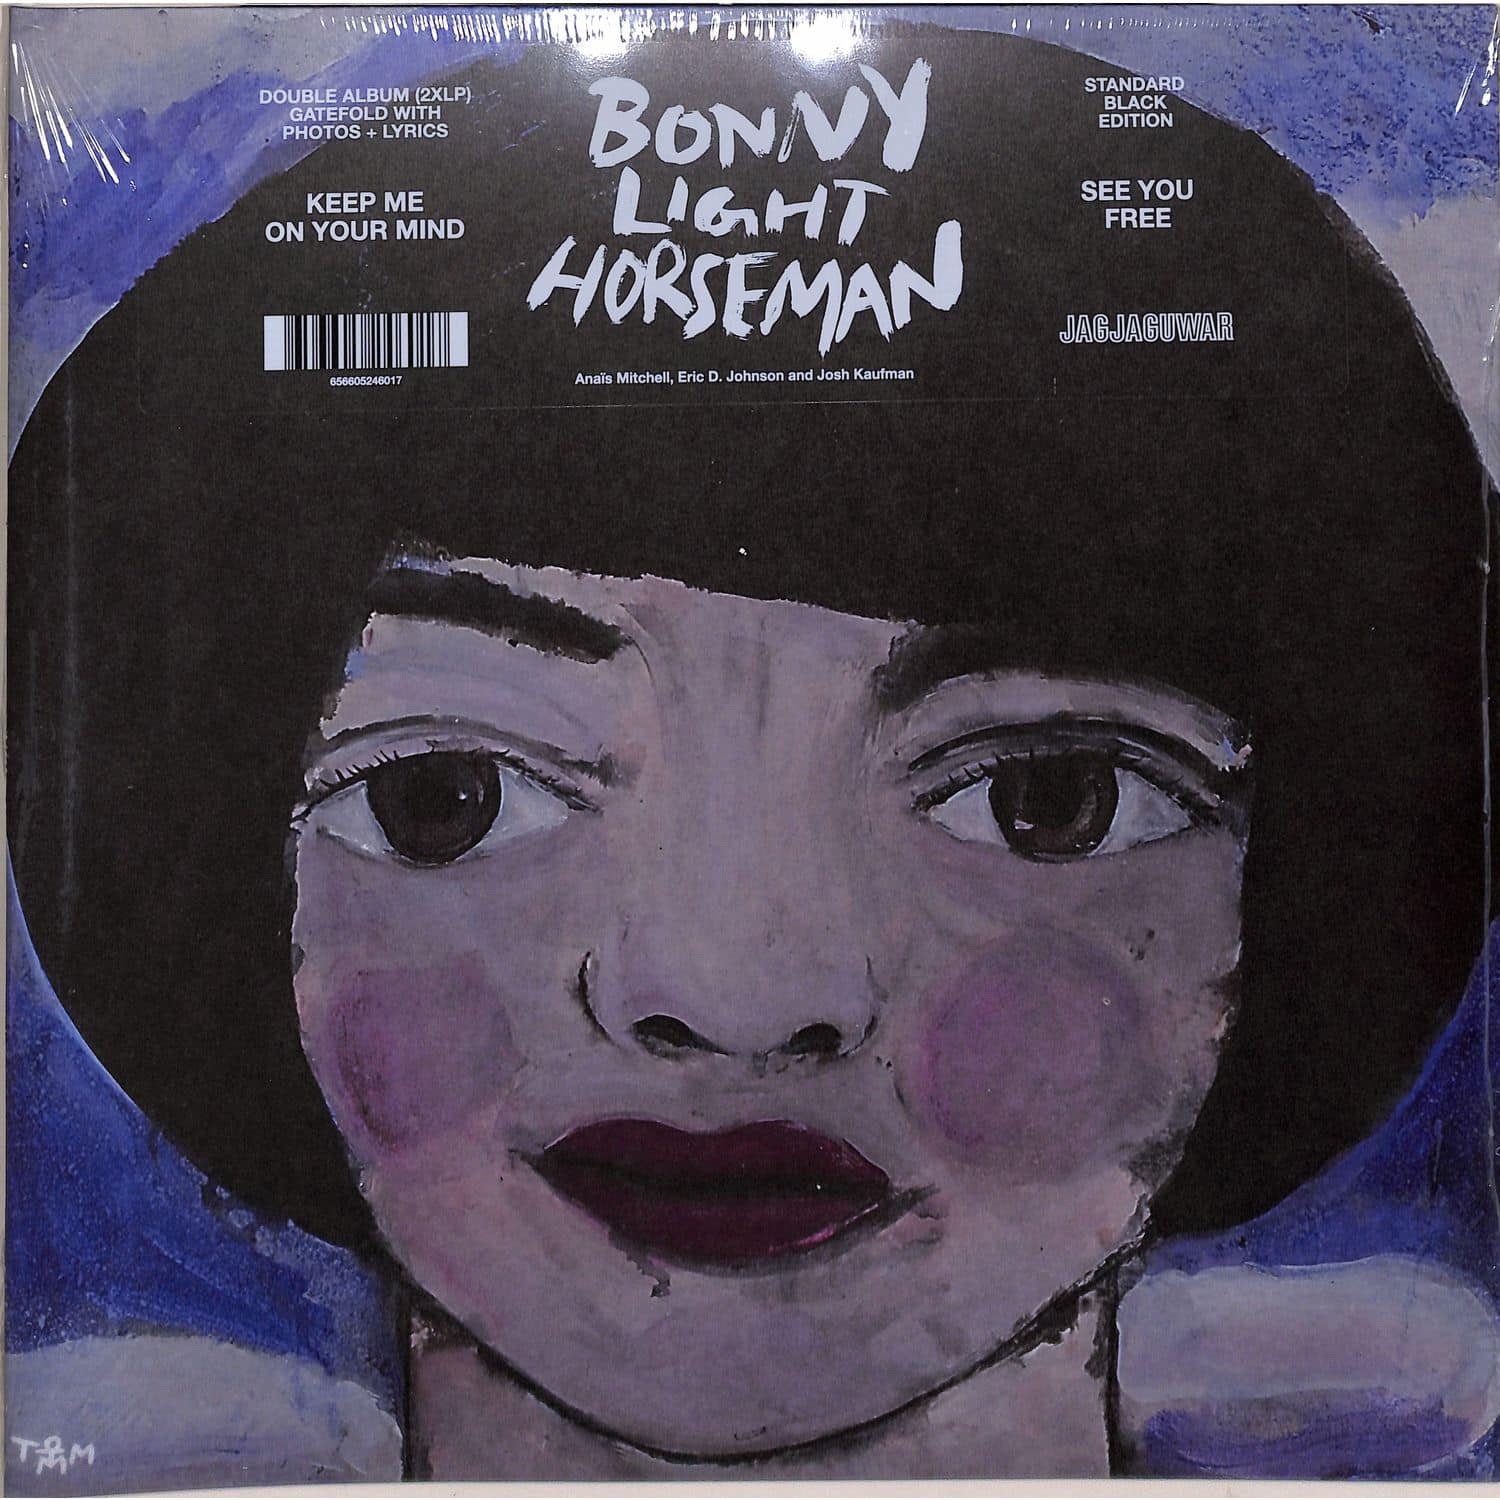 Bonny Light Horseman - KEEP ME ON YOUR MIND / SEE YOU FREE 